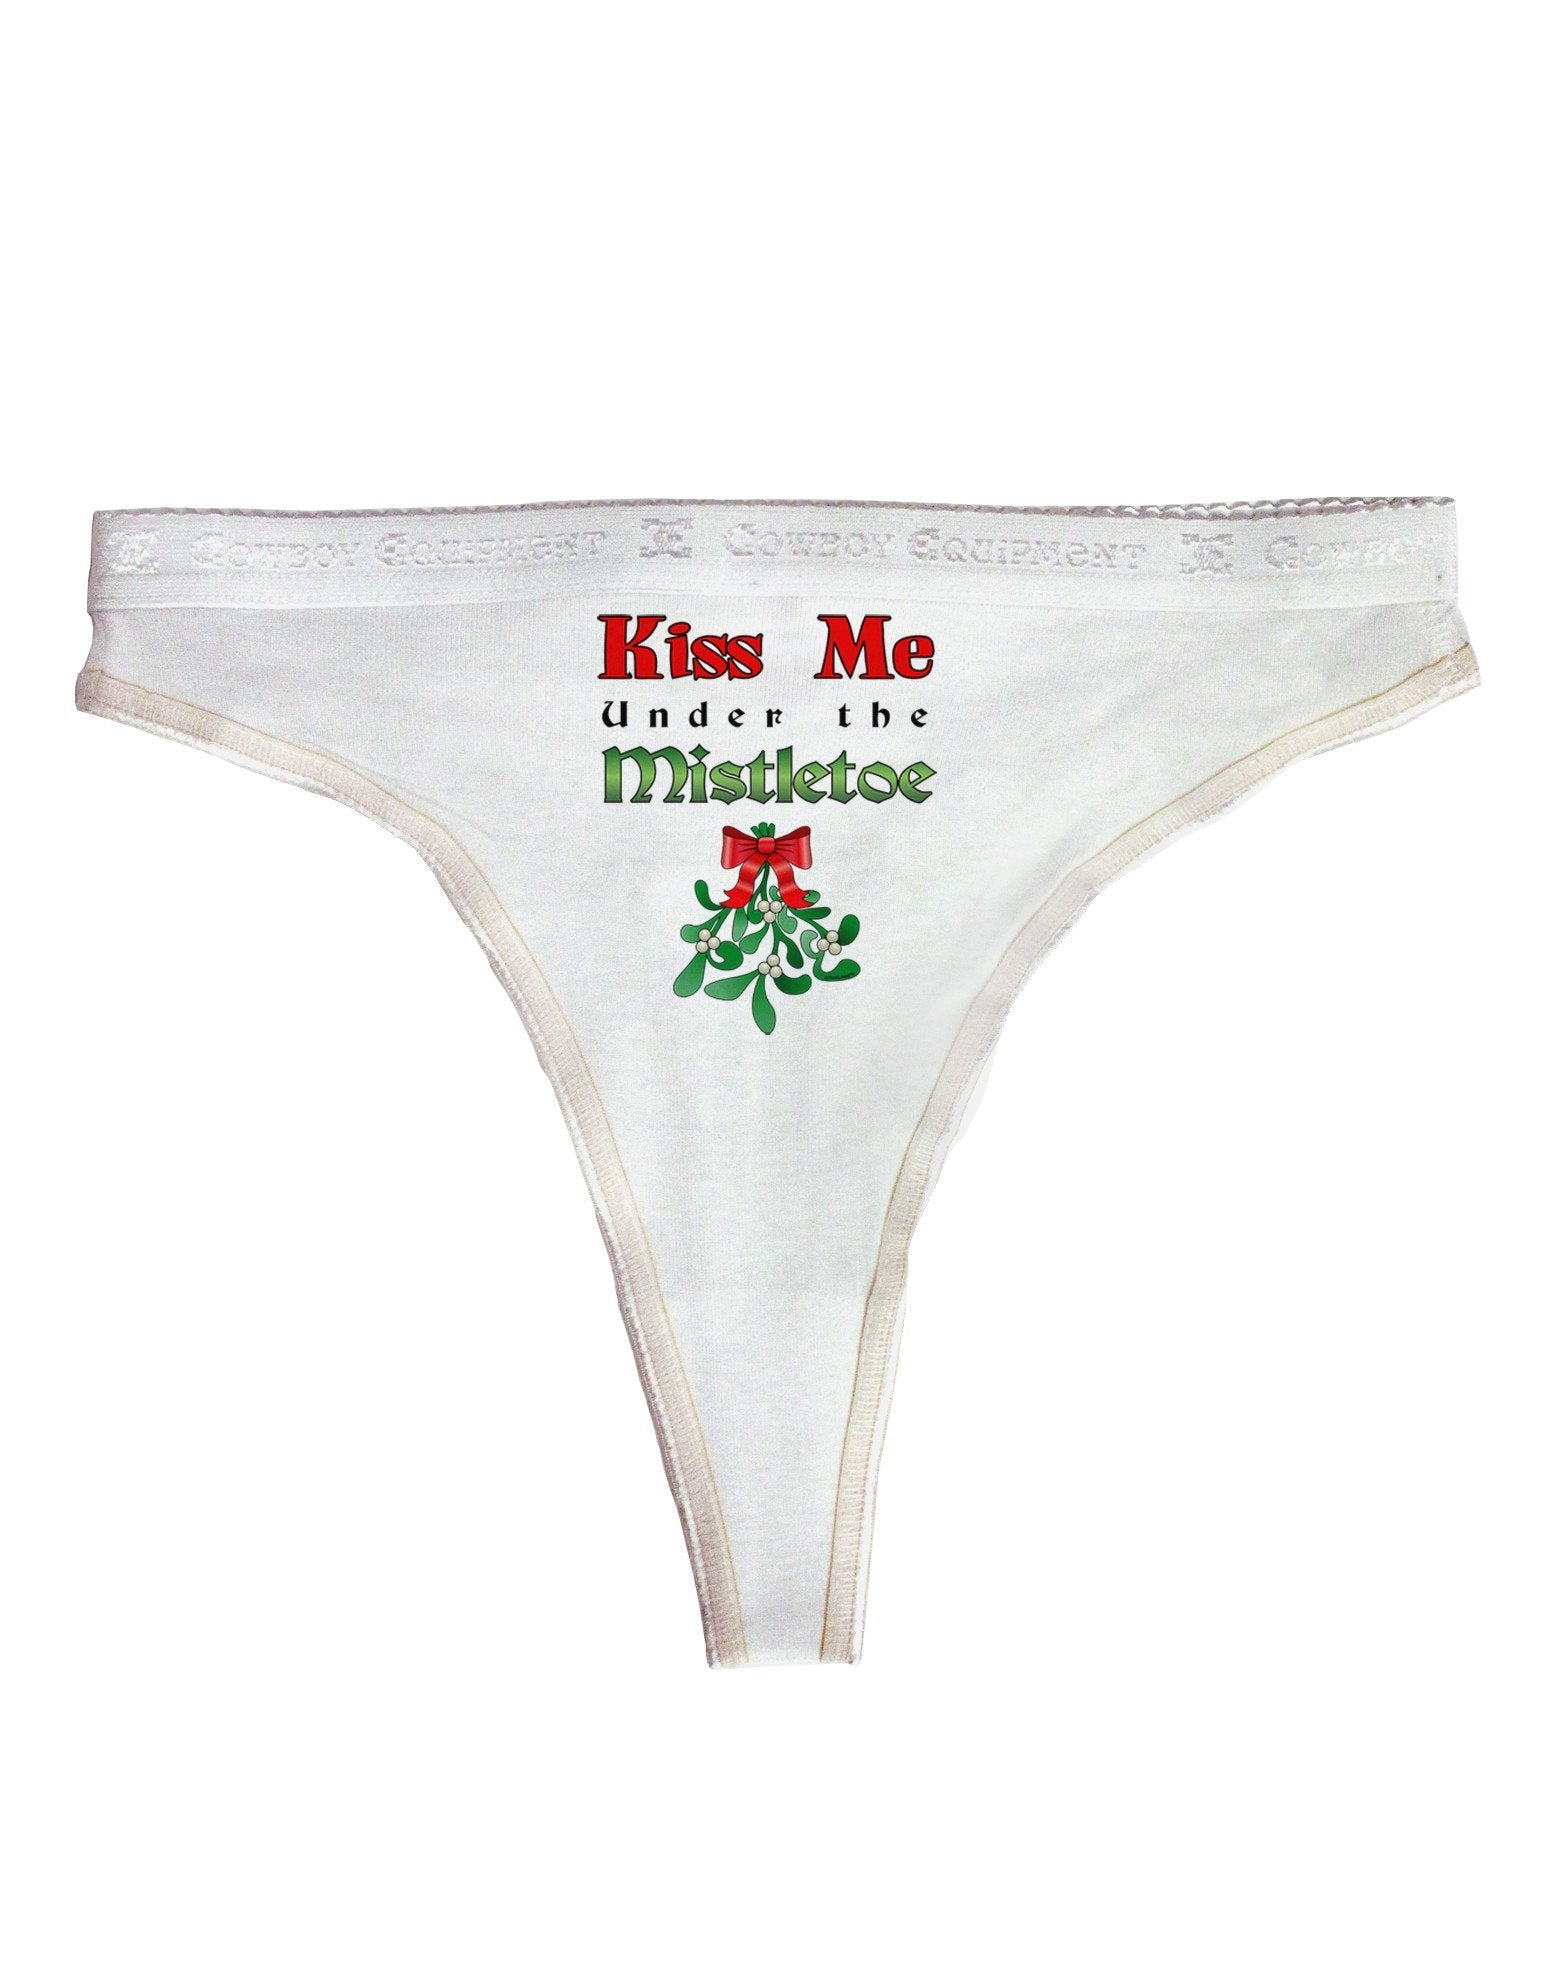 Shop Kiss Me Under the Mistletoe Thong Underwear - XS to L Sizes